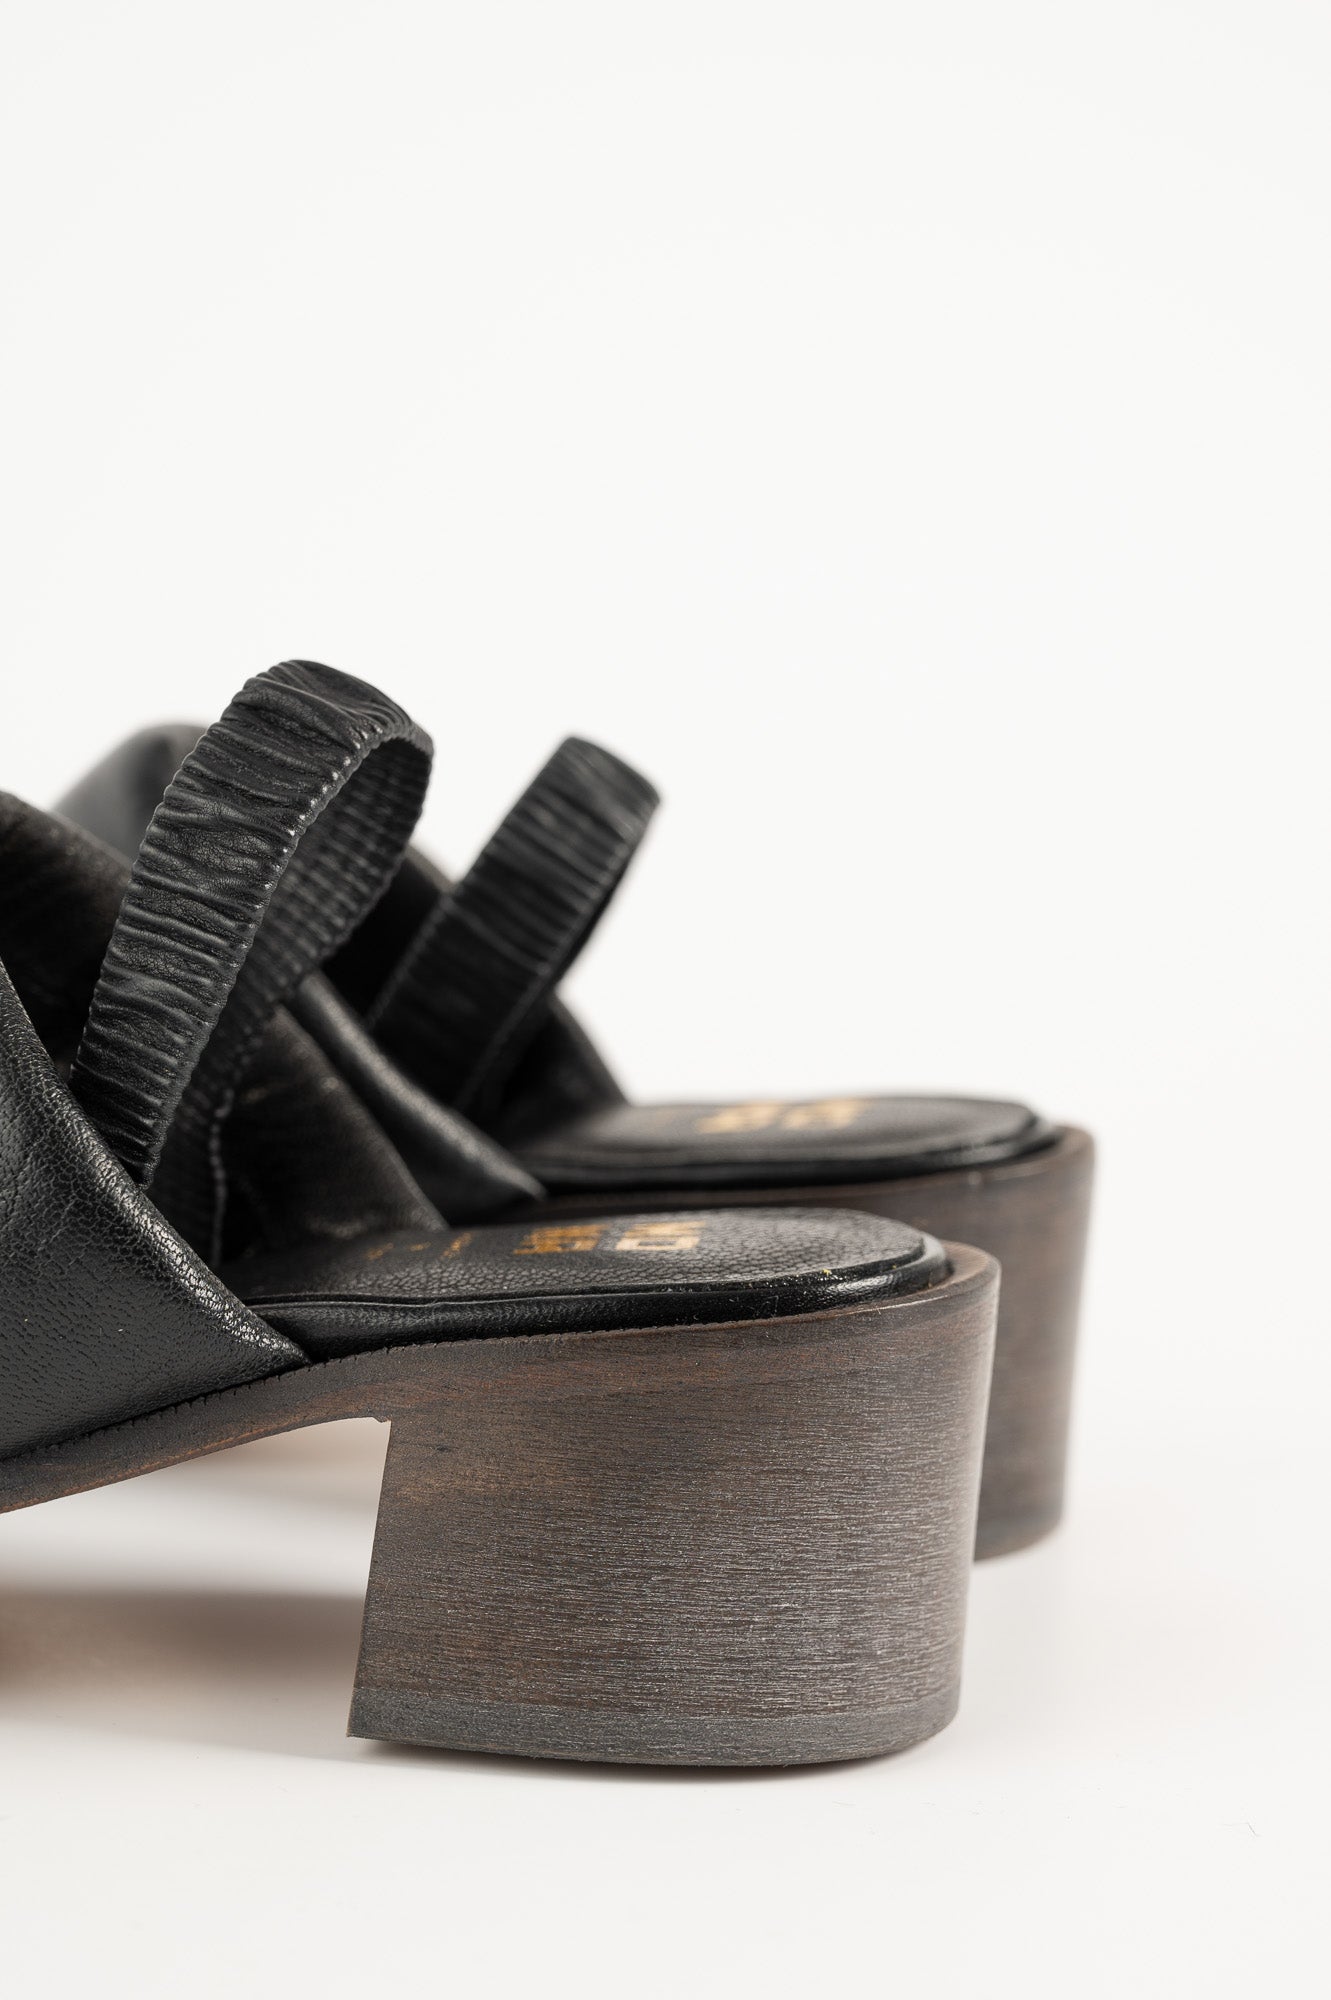 Sandal 124 | Black Leather